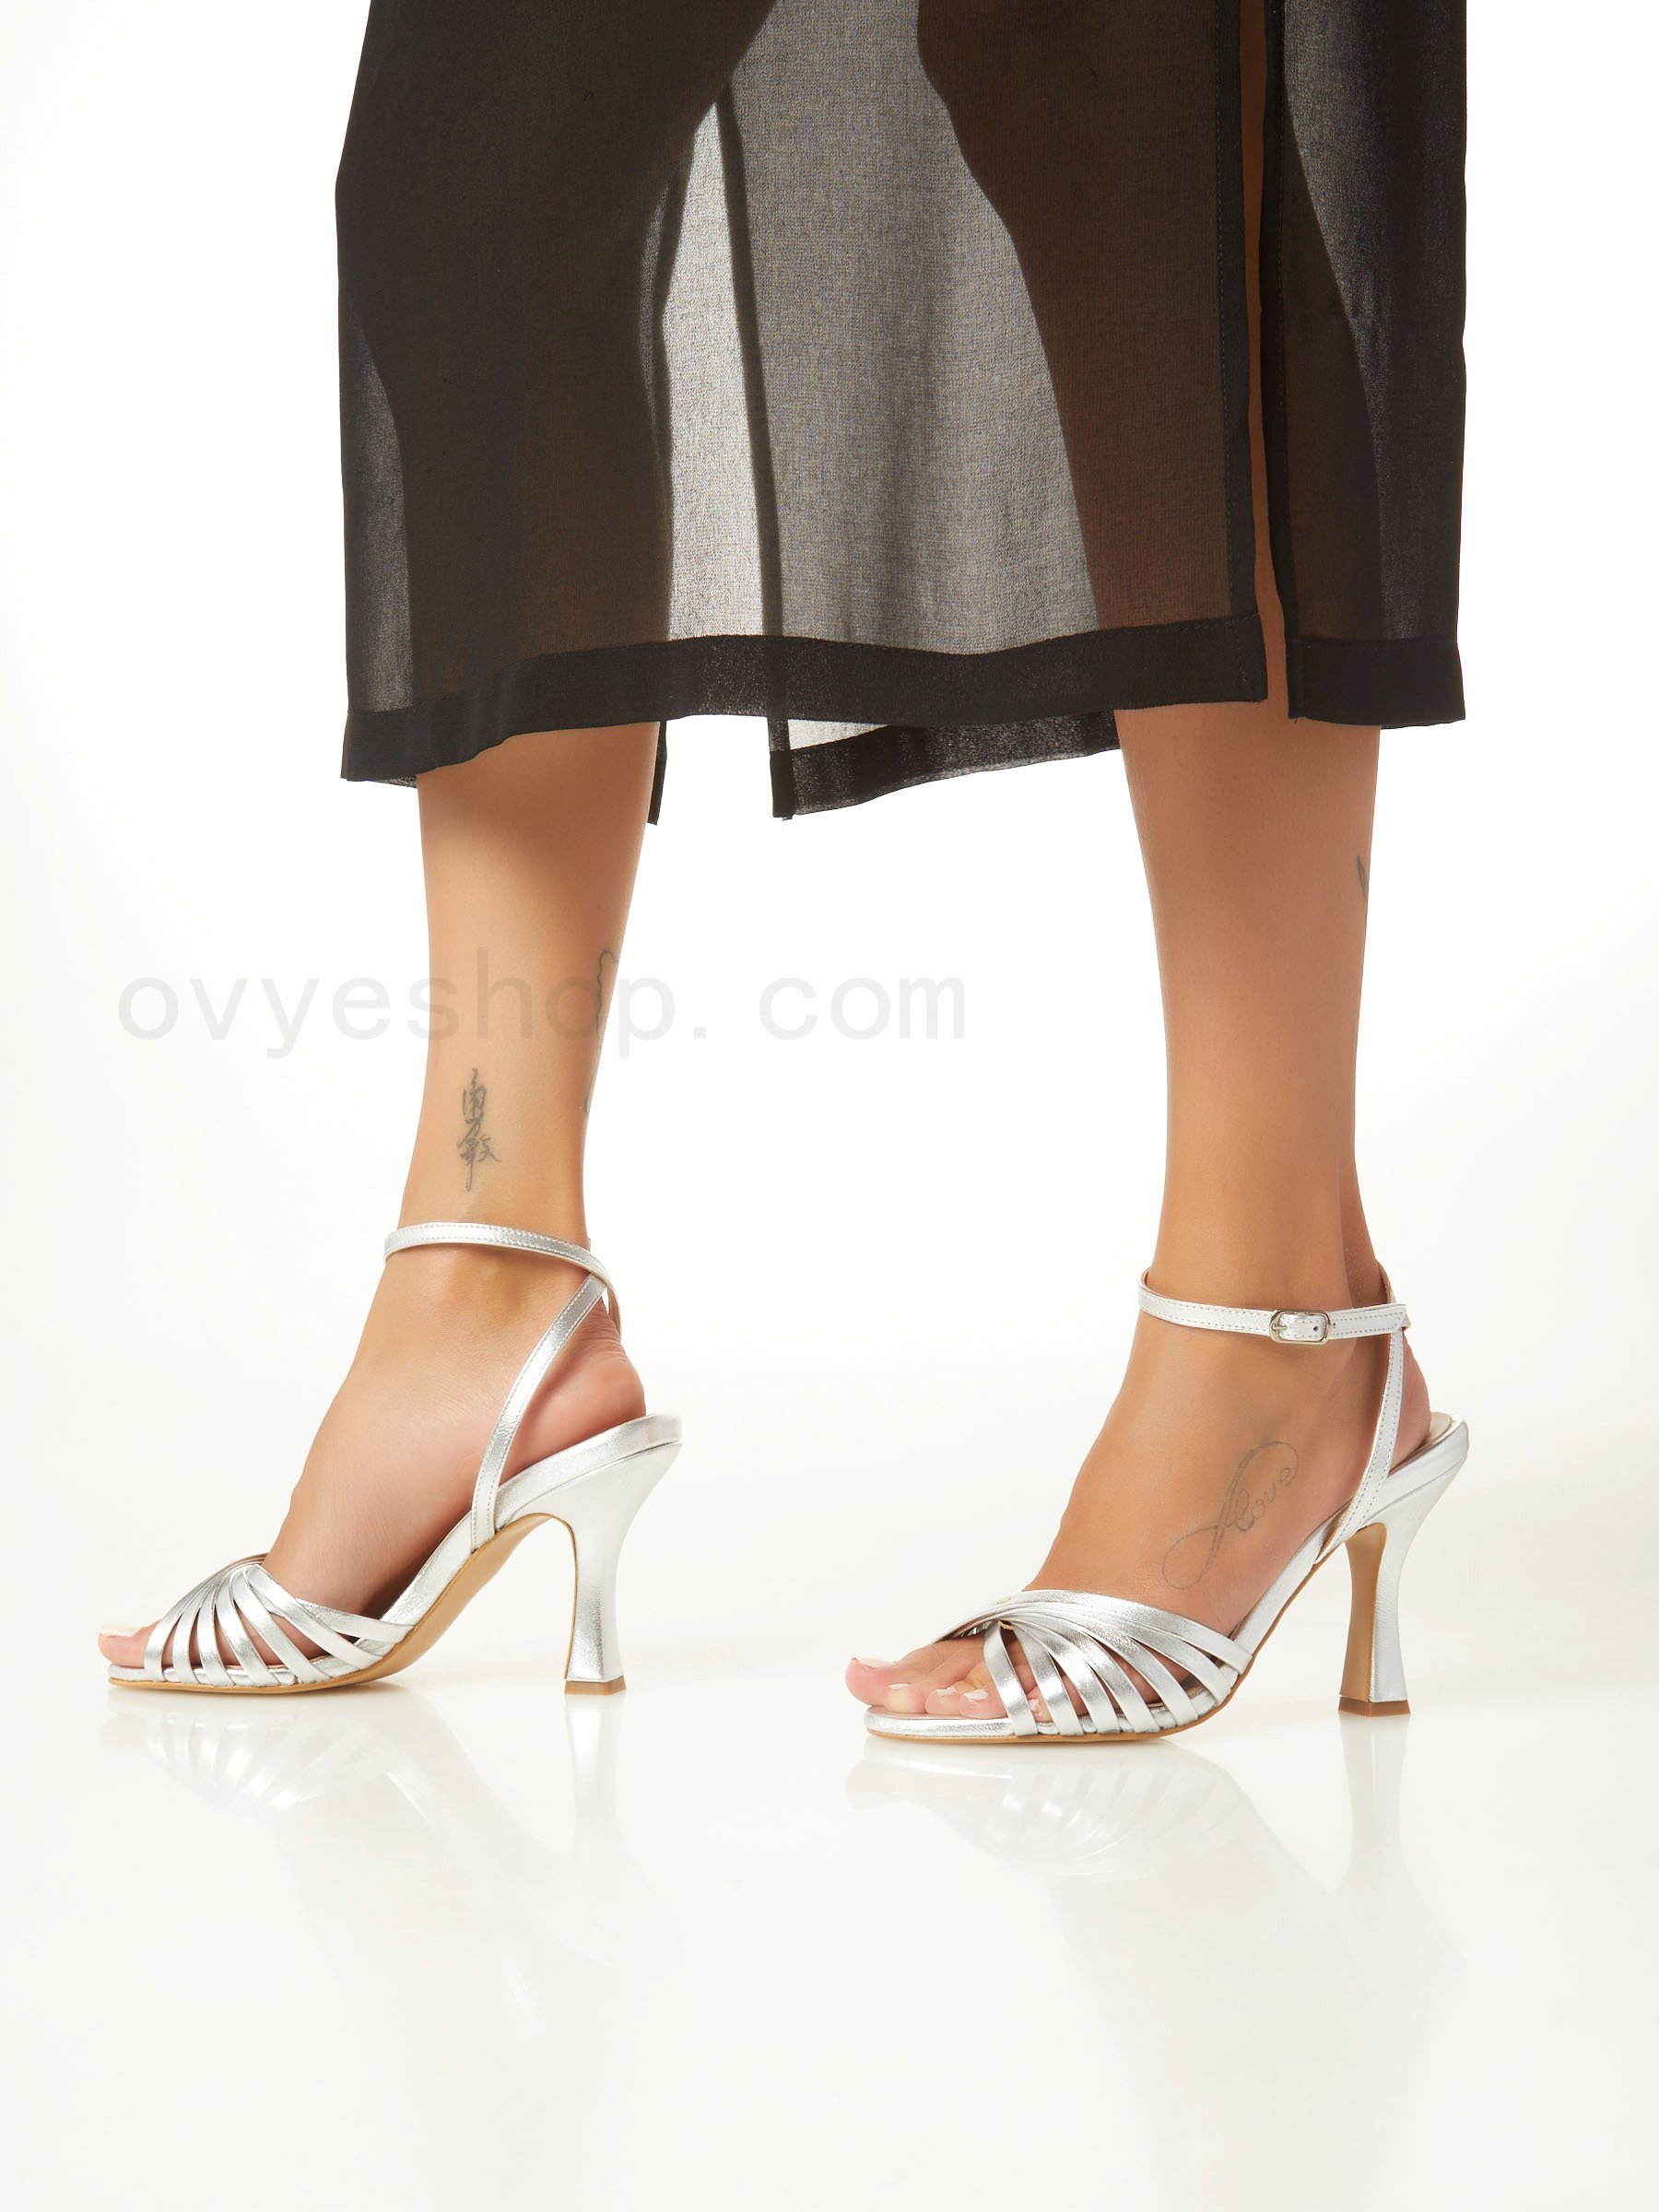 (image for) ovyè scarpe Leather Heel Sandal F0817885-0640